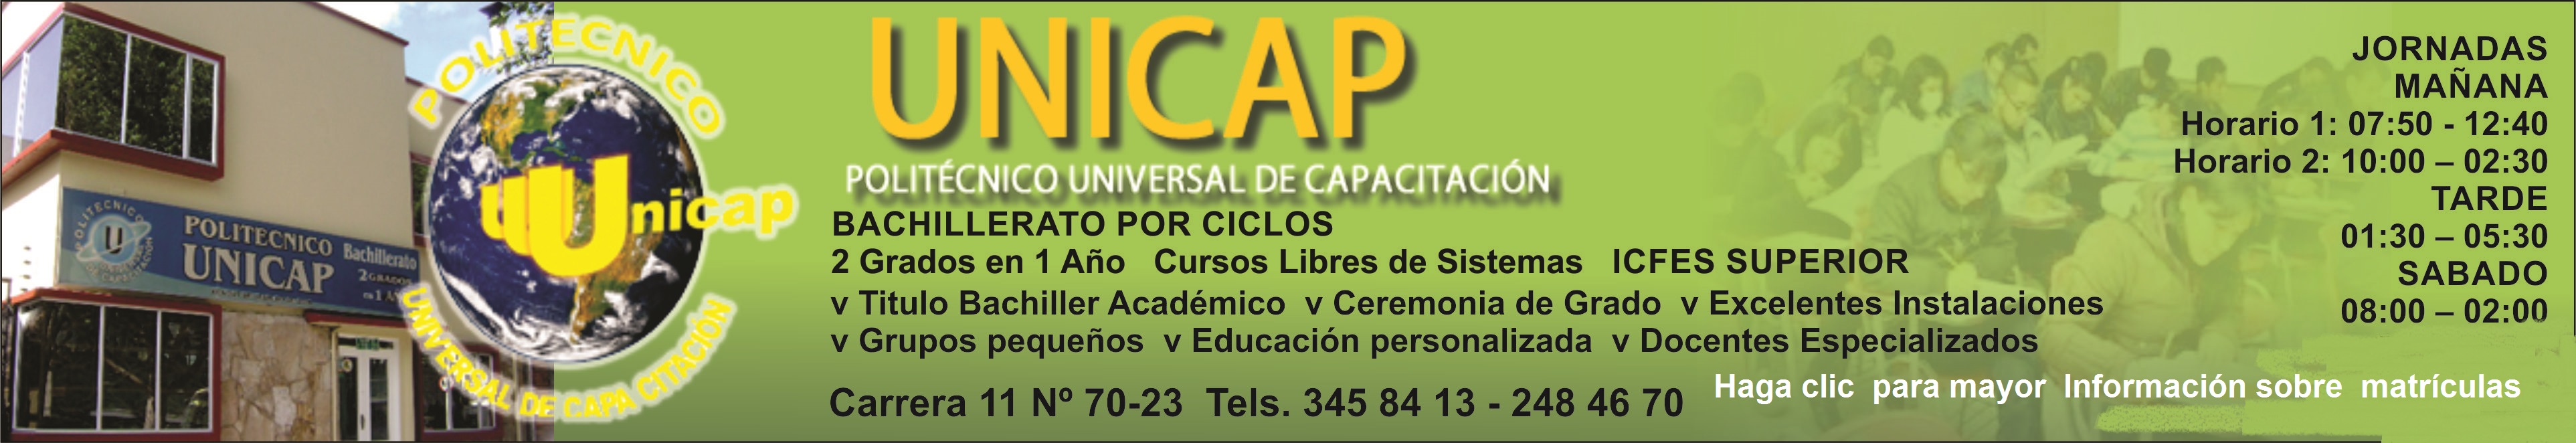 tl_files/2018 Abril/Politecnico Unicap 2.jpg